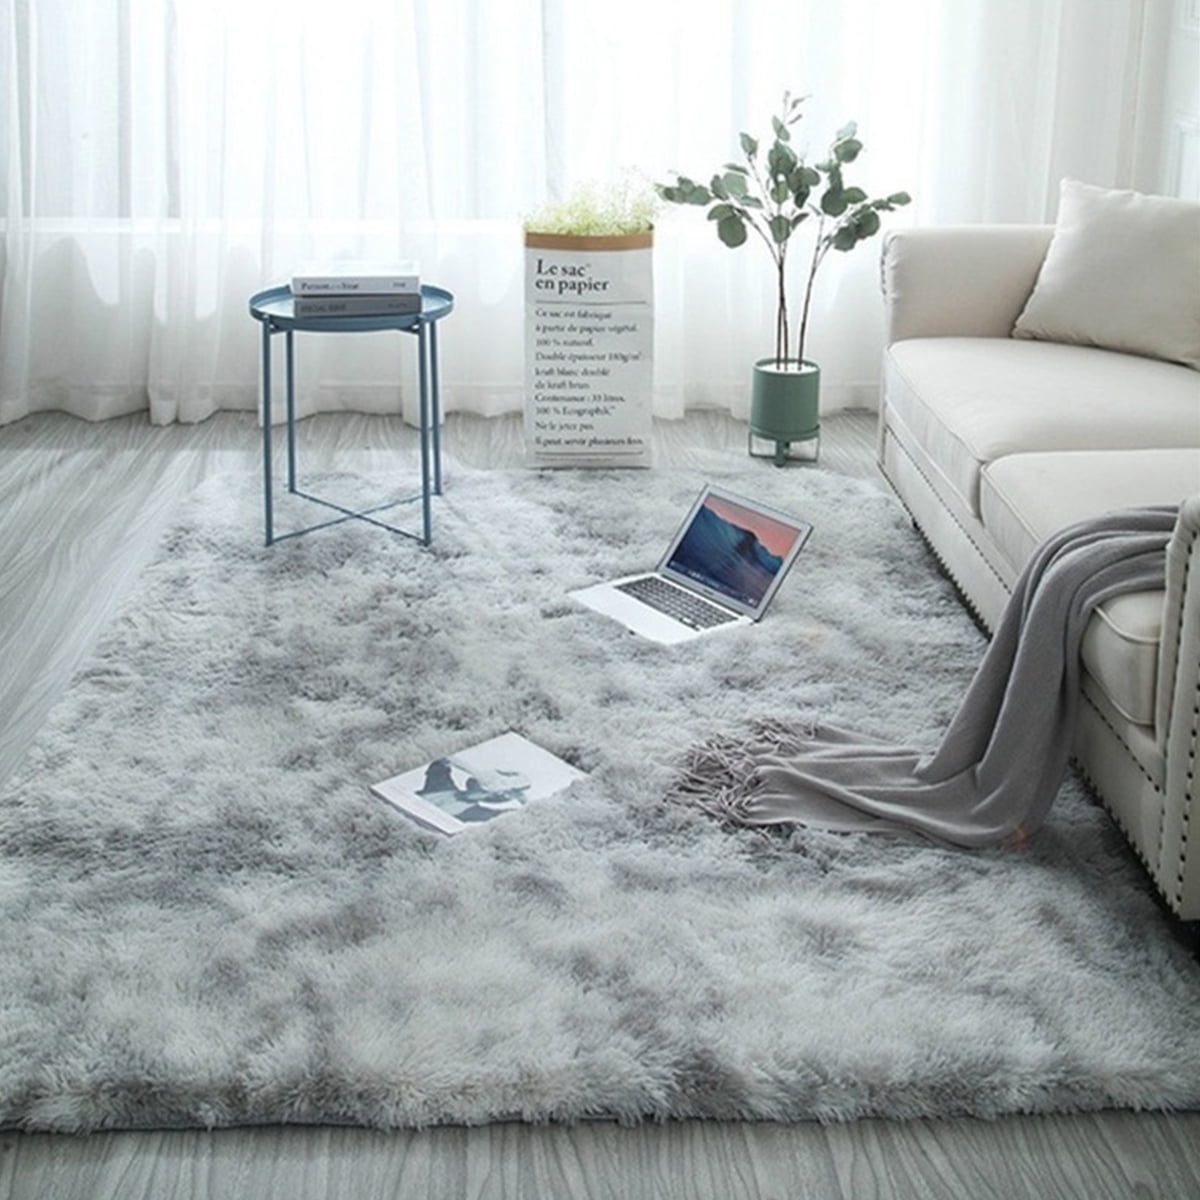 Soft Shaggy Areas Rug Dining Room Home Carpet Anti-Skid Useful Floor Mat Mystic 